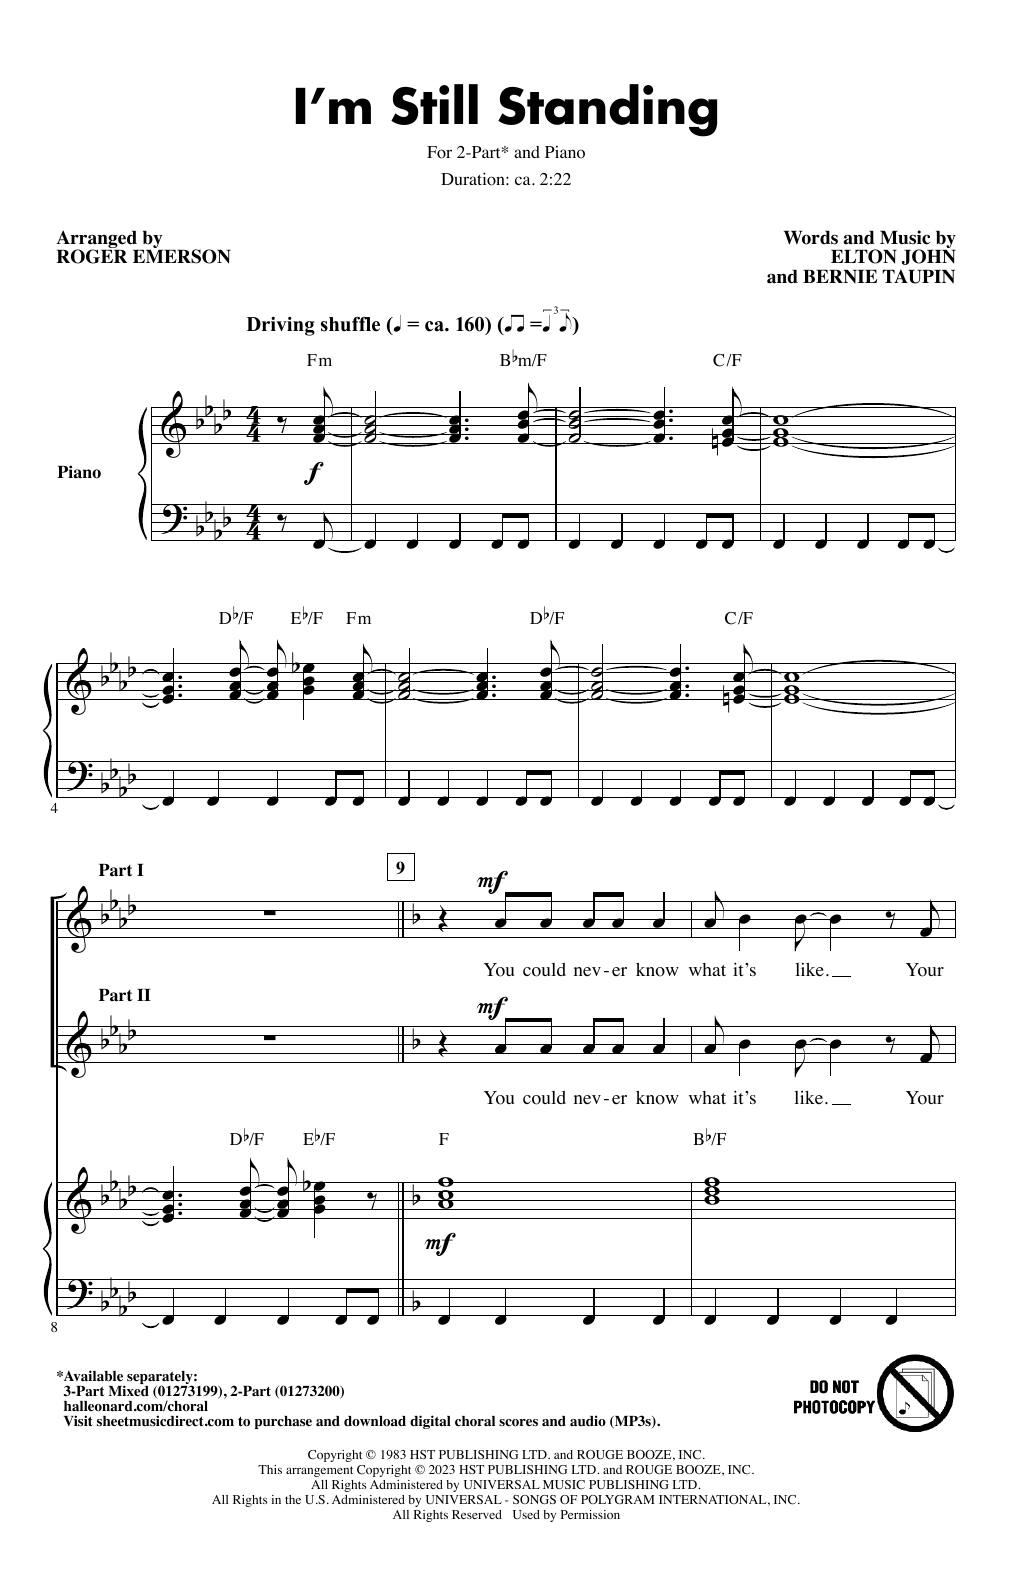 Elton John I'm Still Standing (arr. Roger Emerson) sheet music notes and chords arranged for 2-Part Choir